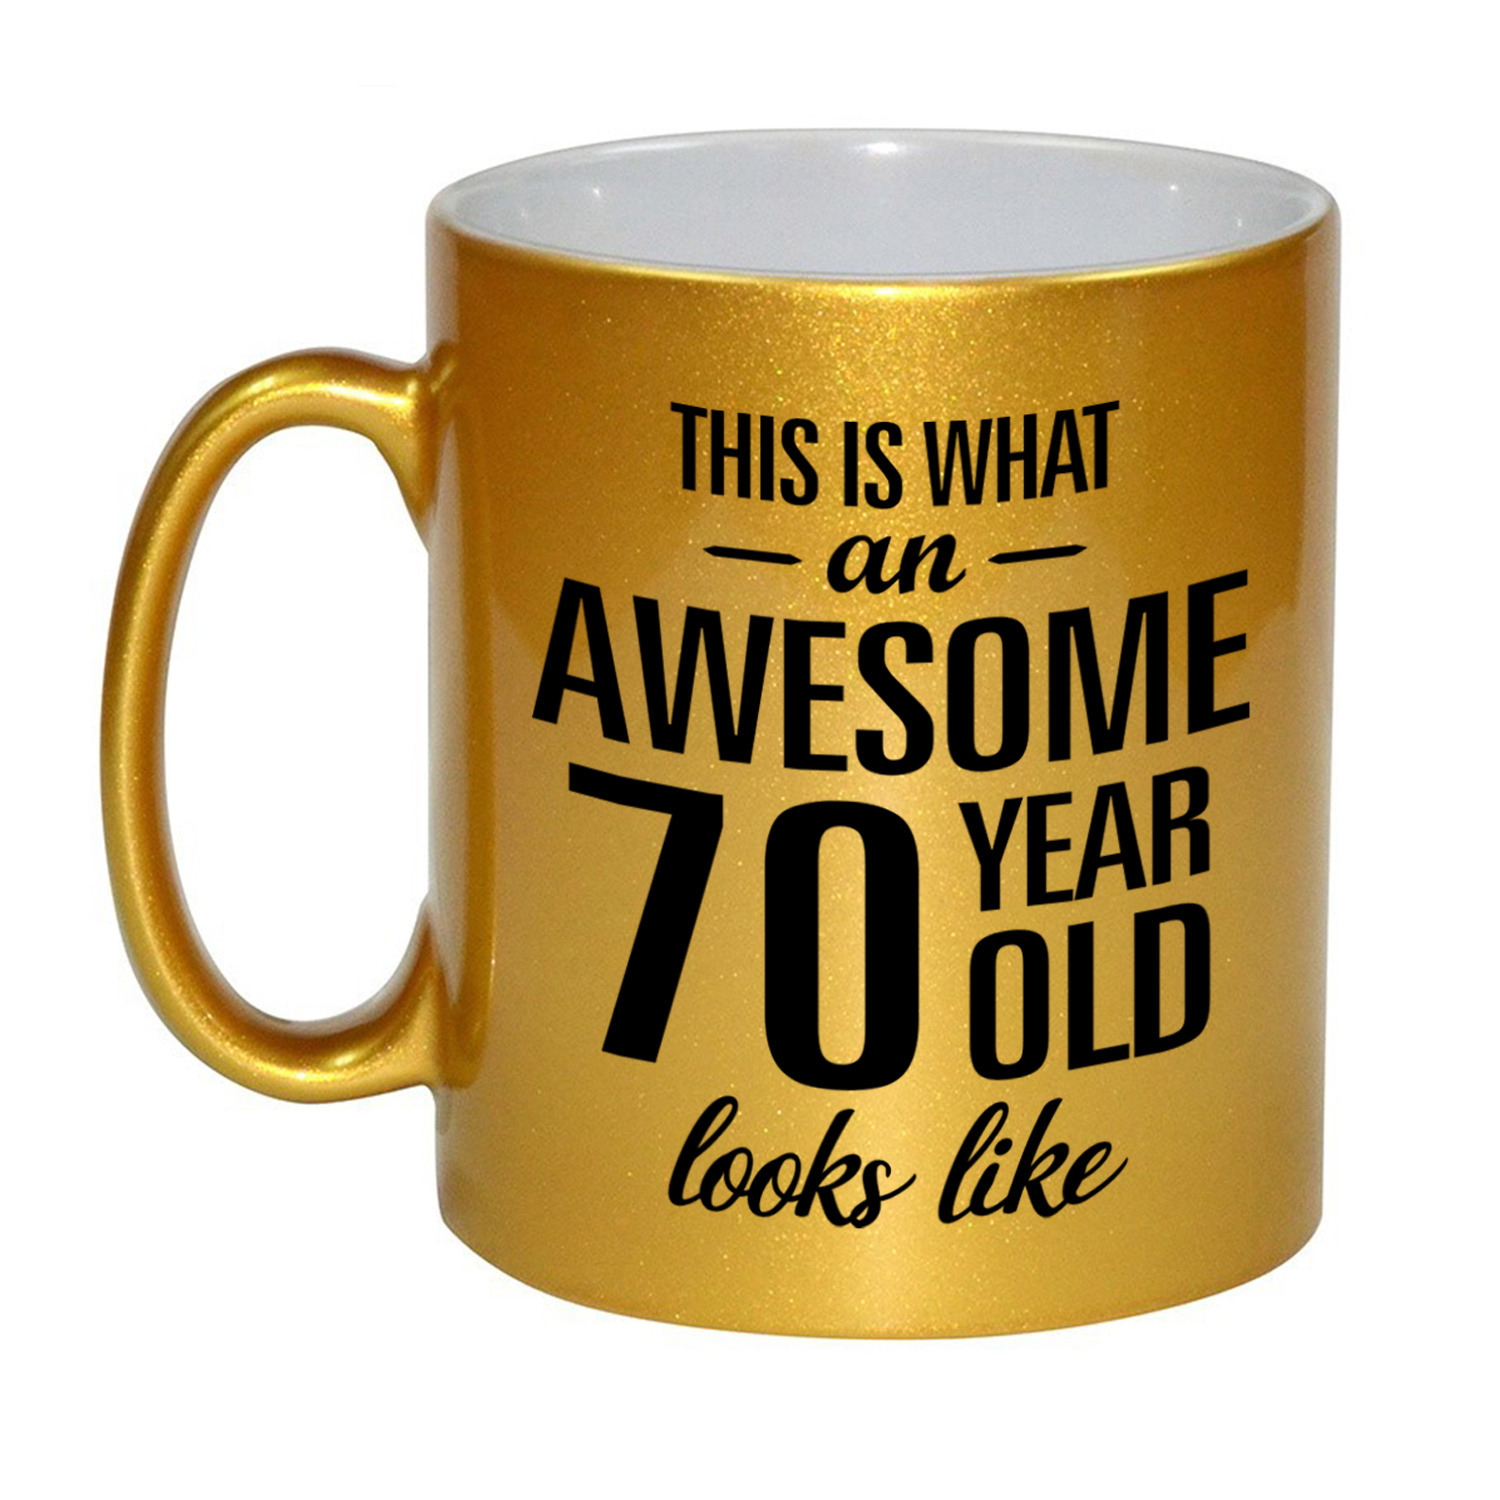 Awesome 70 year cadeau mok-beker goud 330 ml